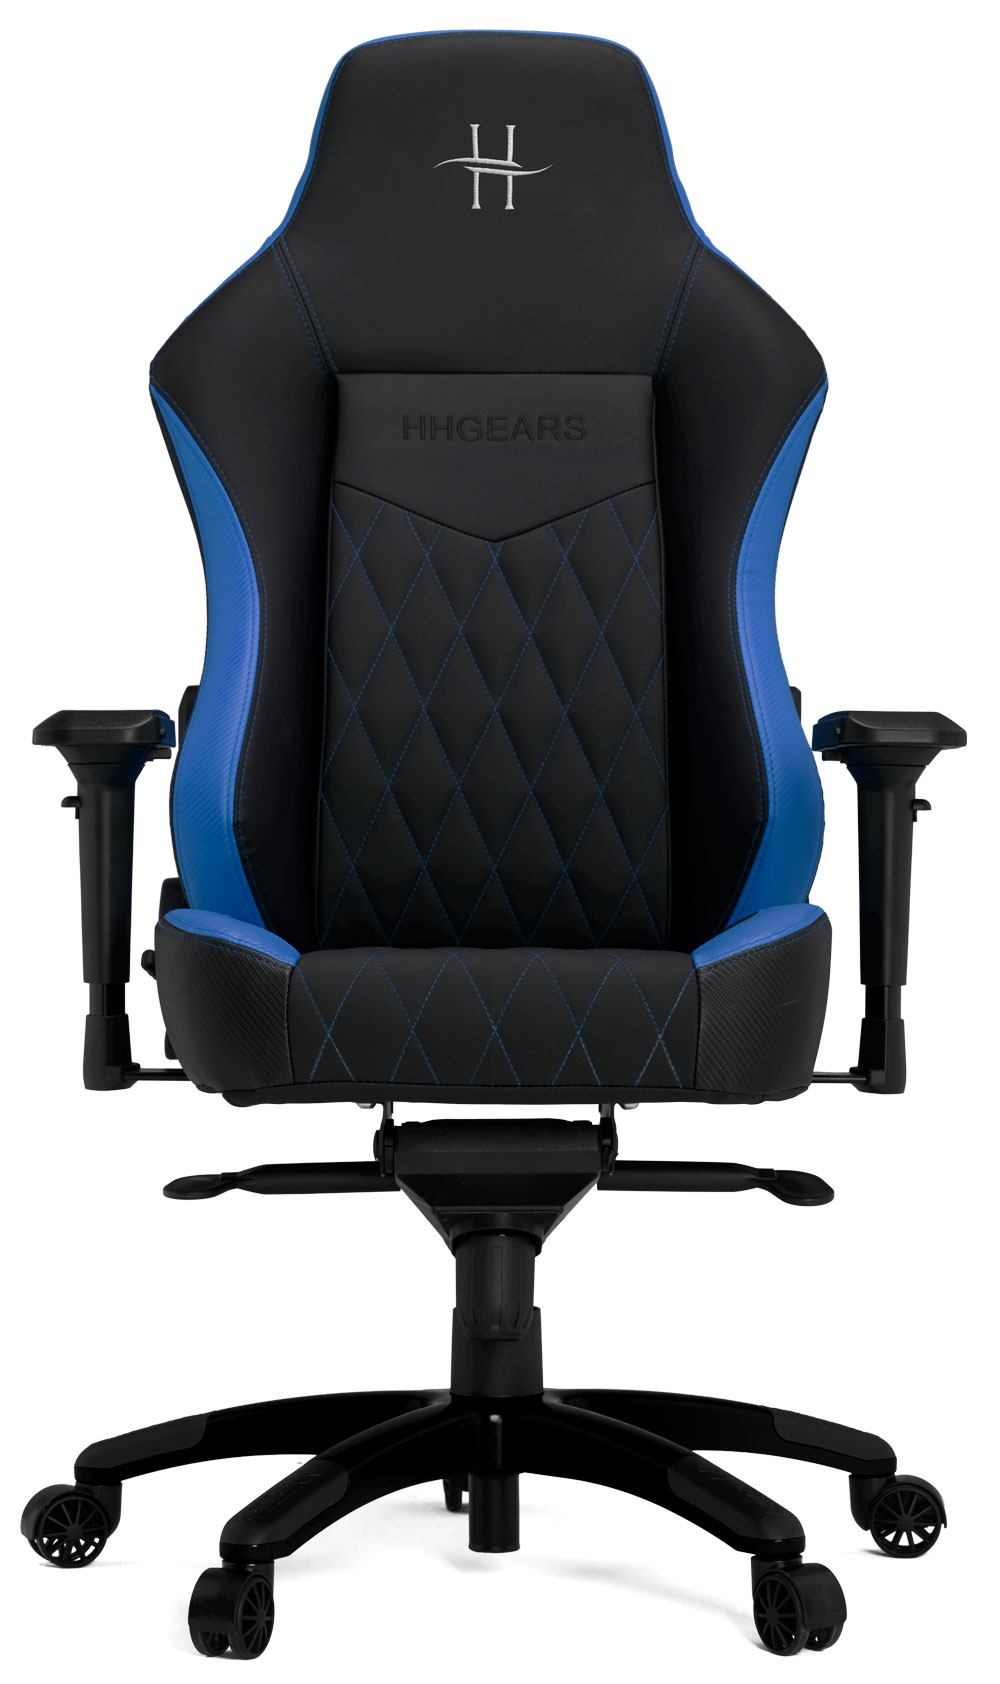 HHGears XL-800 Gaming Chair - Black/Blue - Best Deal - South Africa